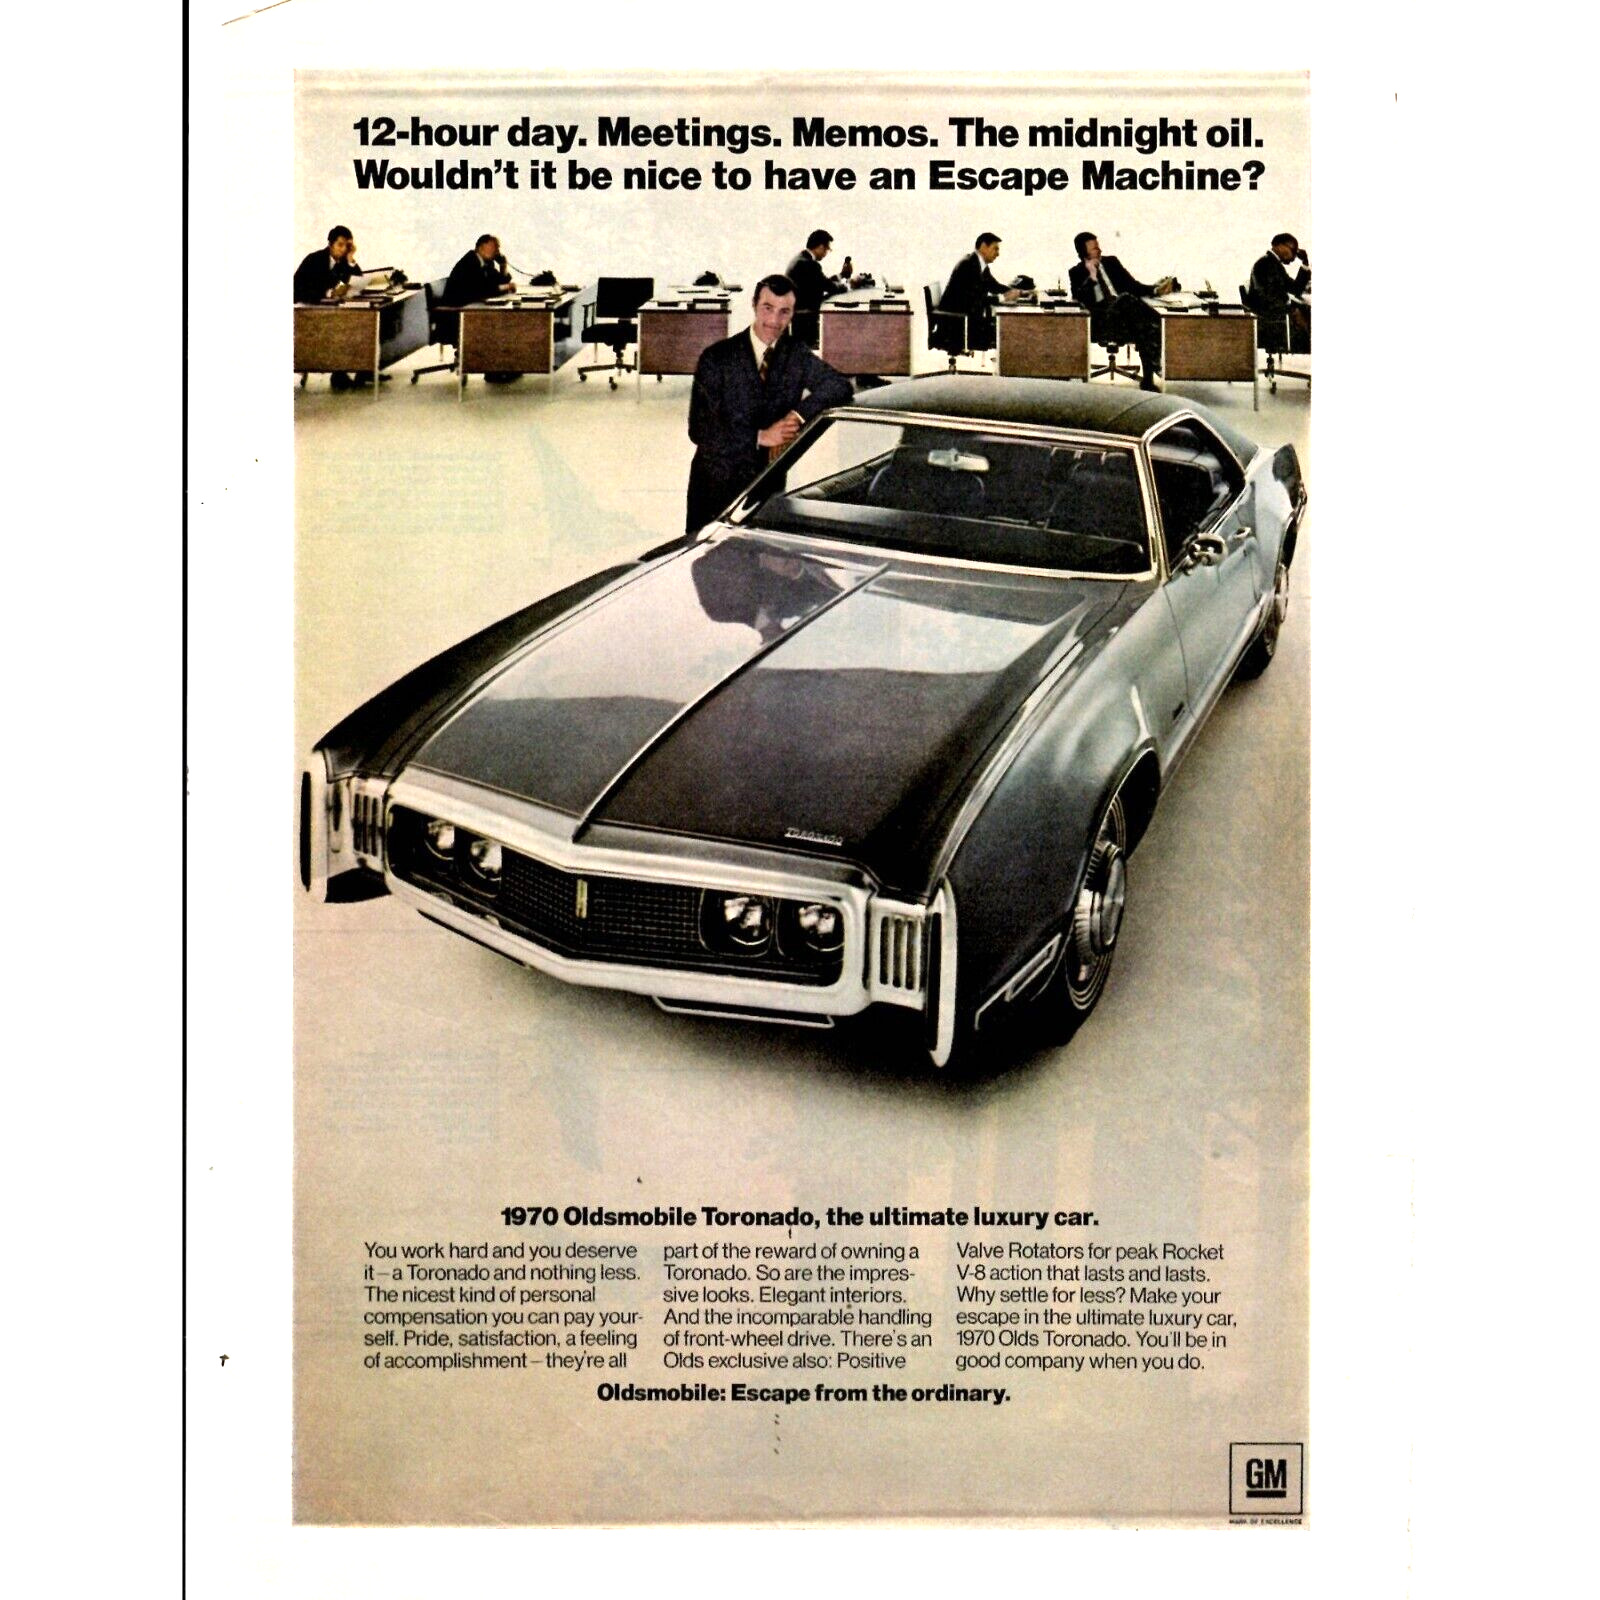 1970 Oldsmobile Tornonado VTG Advertising Print Ad Escape Machine General Motors